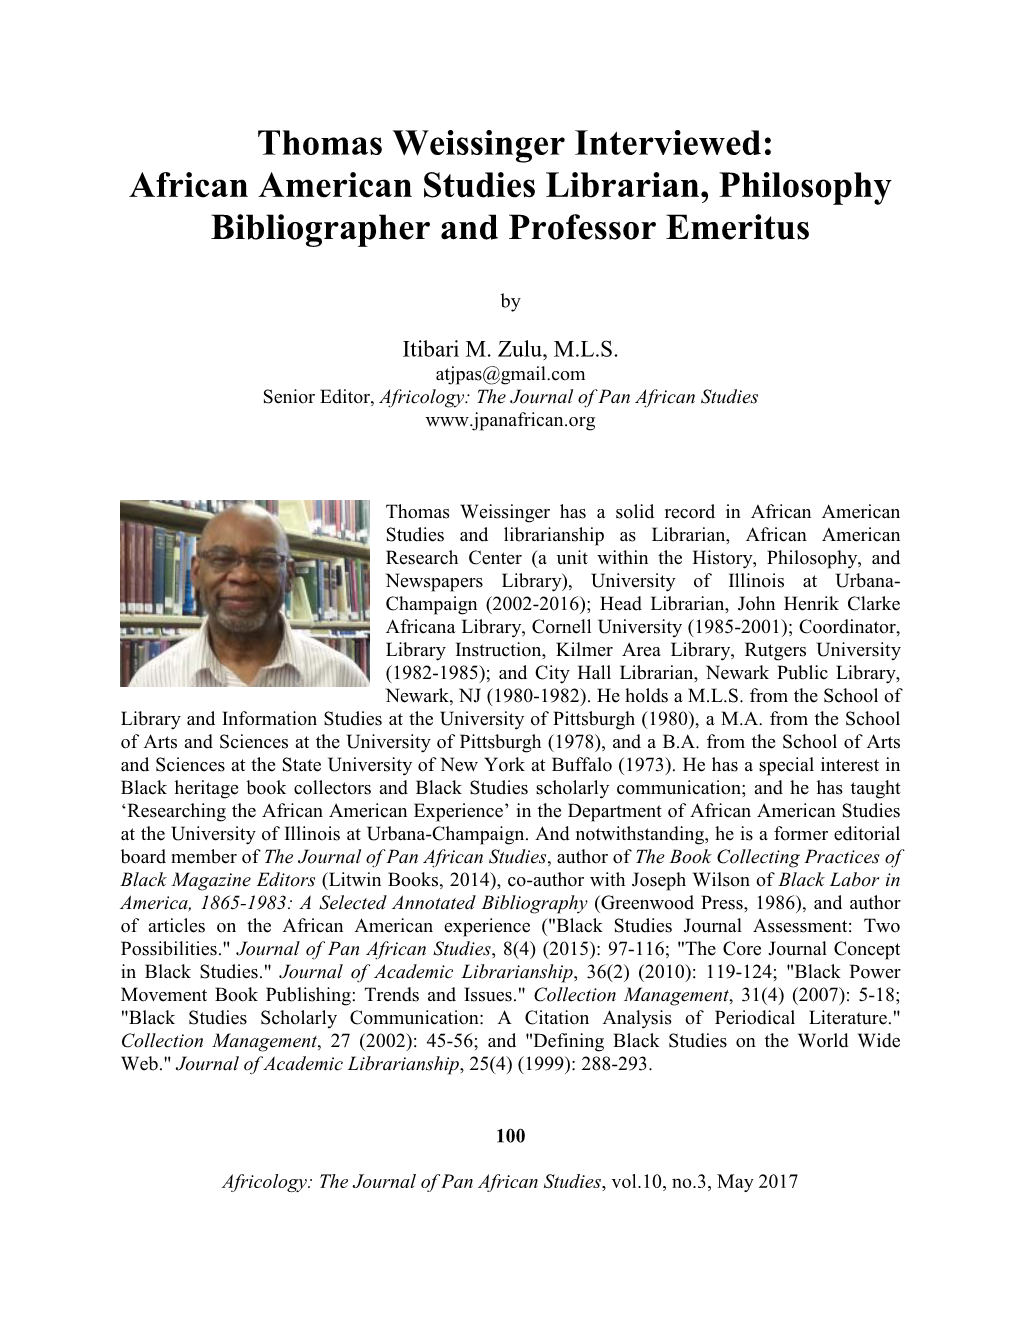 Thomas Weissinger Interviewed: African American Studies Librarian, Philosophy Bibliographer and Professor Emeritus